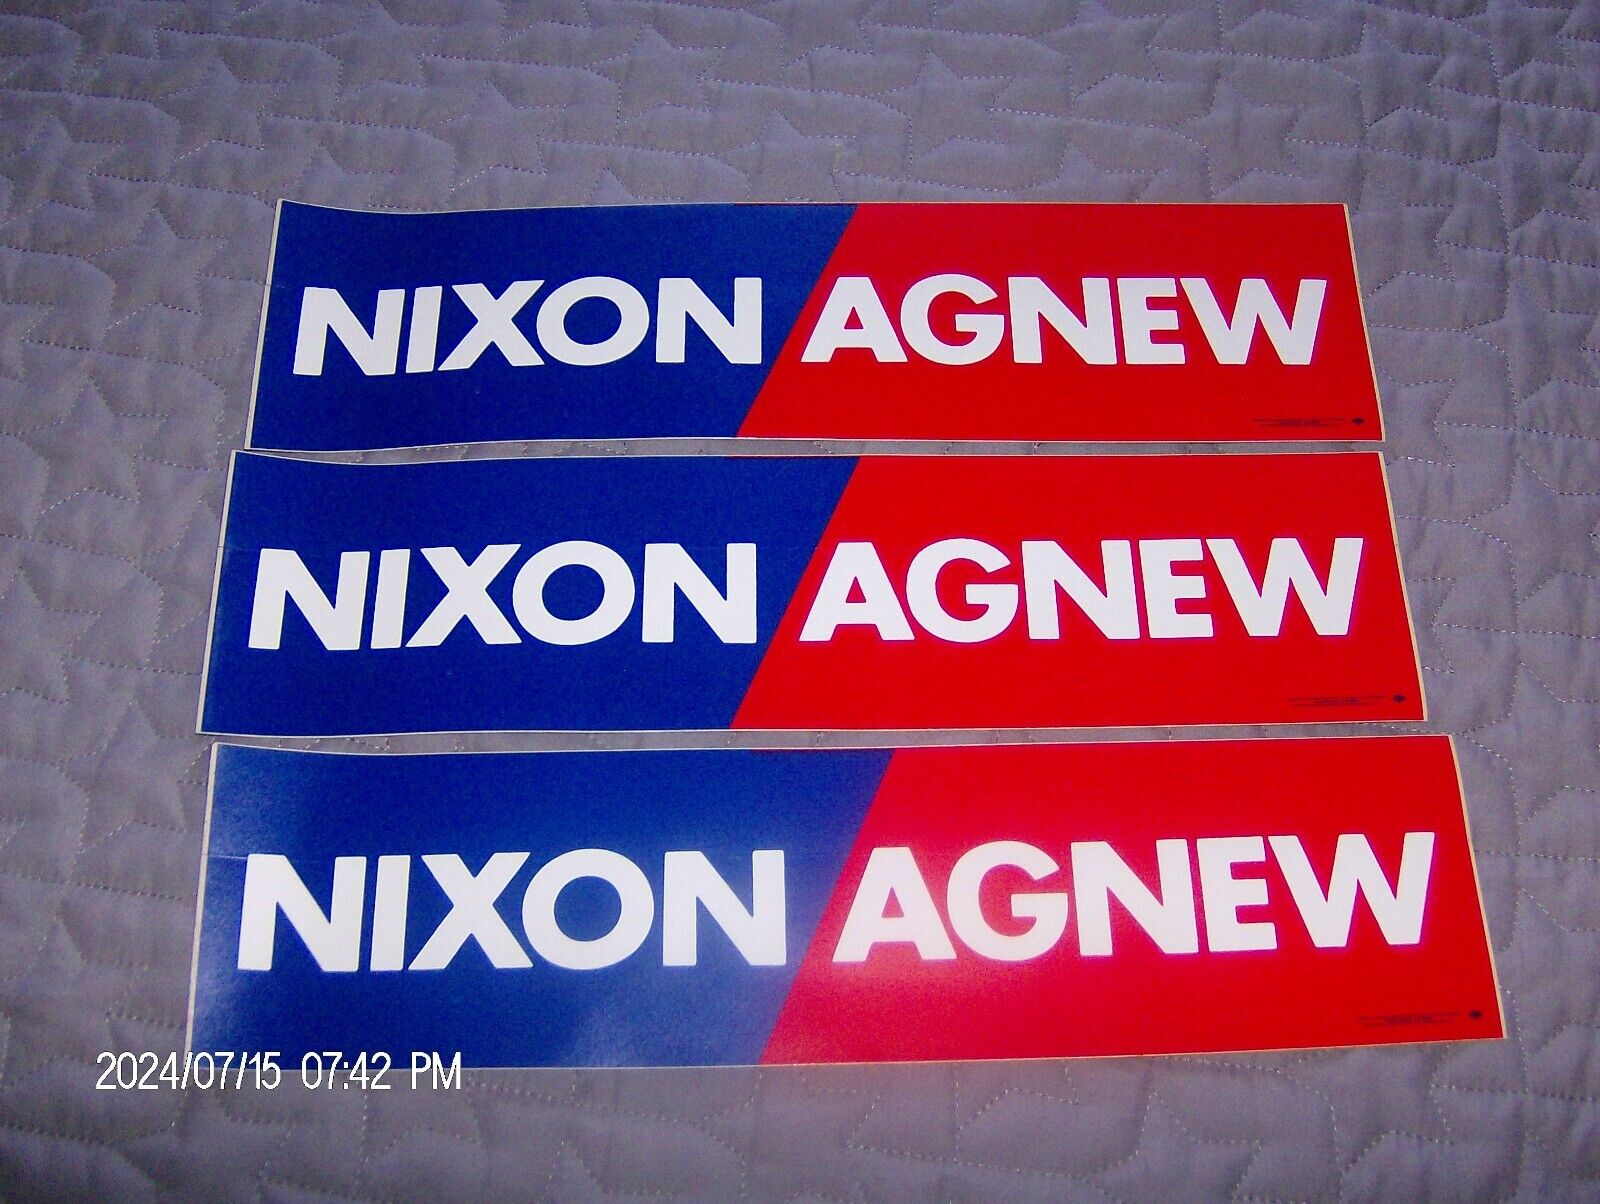 3 Nixon Agnew bumper stickers Never used